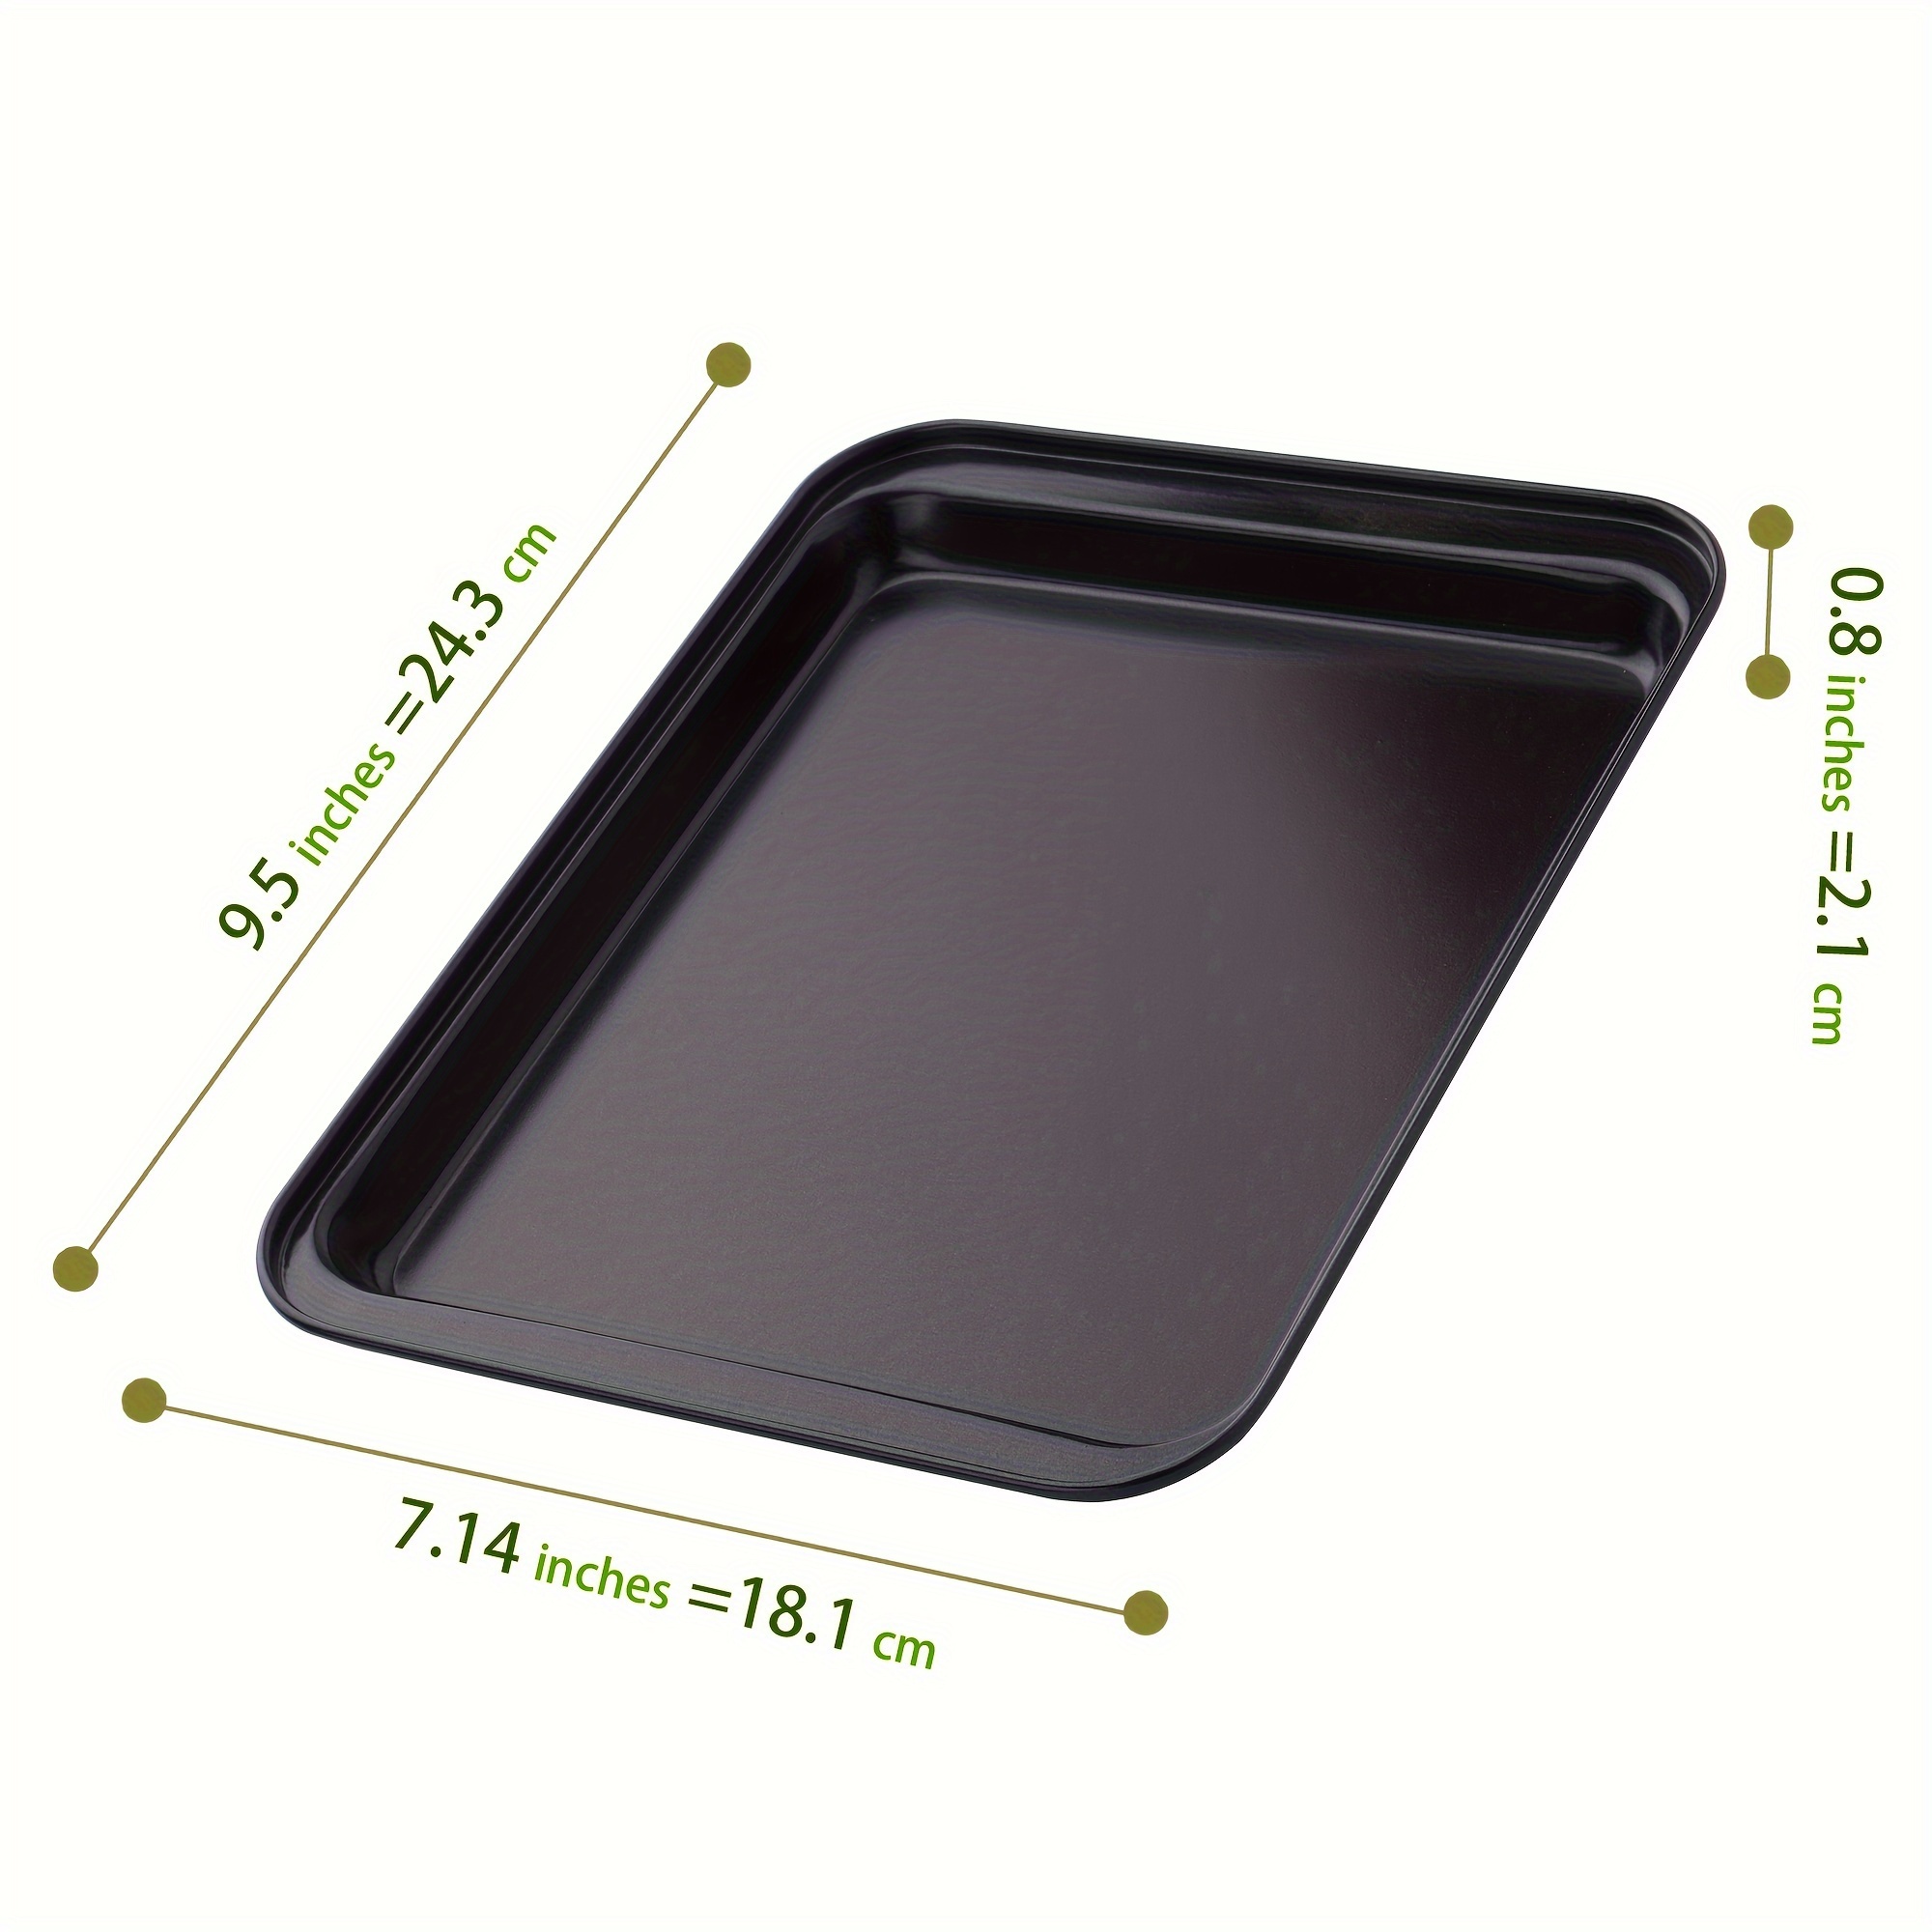 1 Inch Small Plastic Tray (Black)